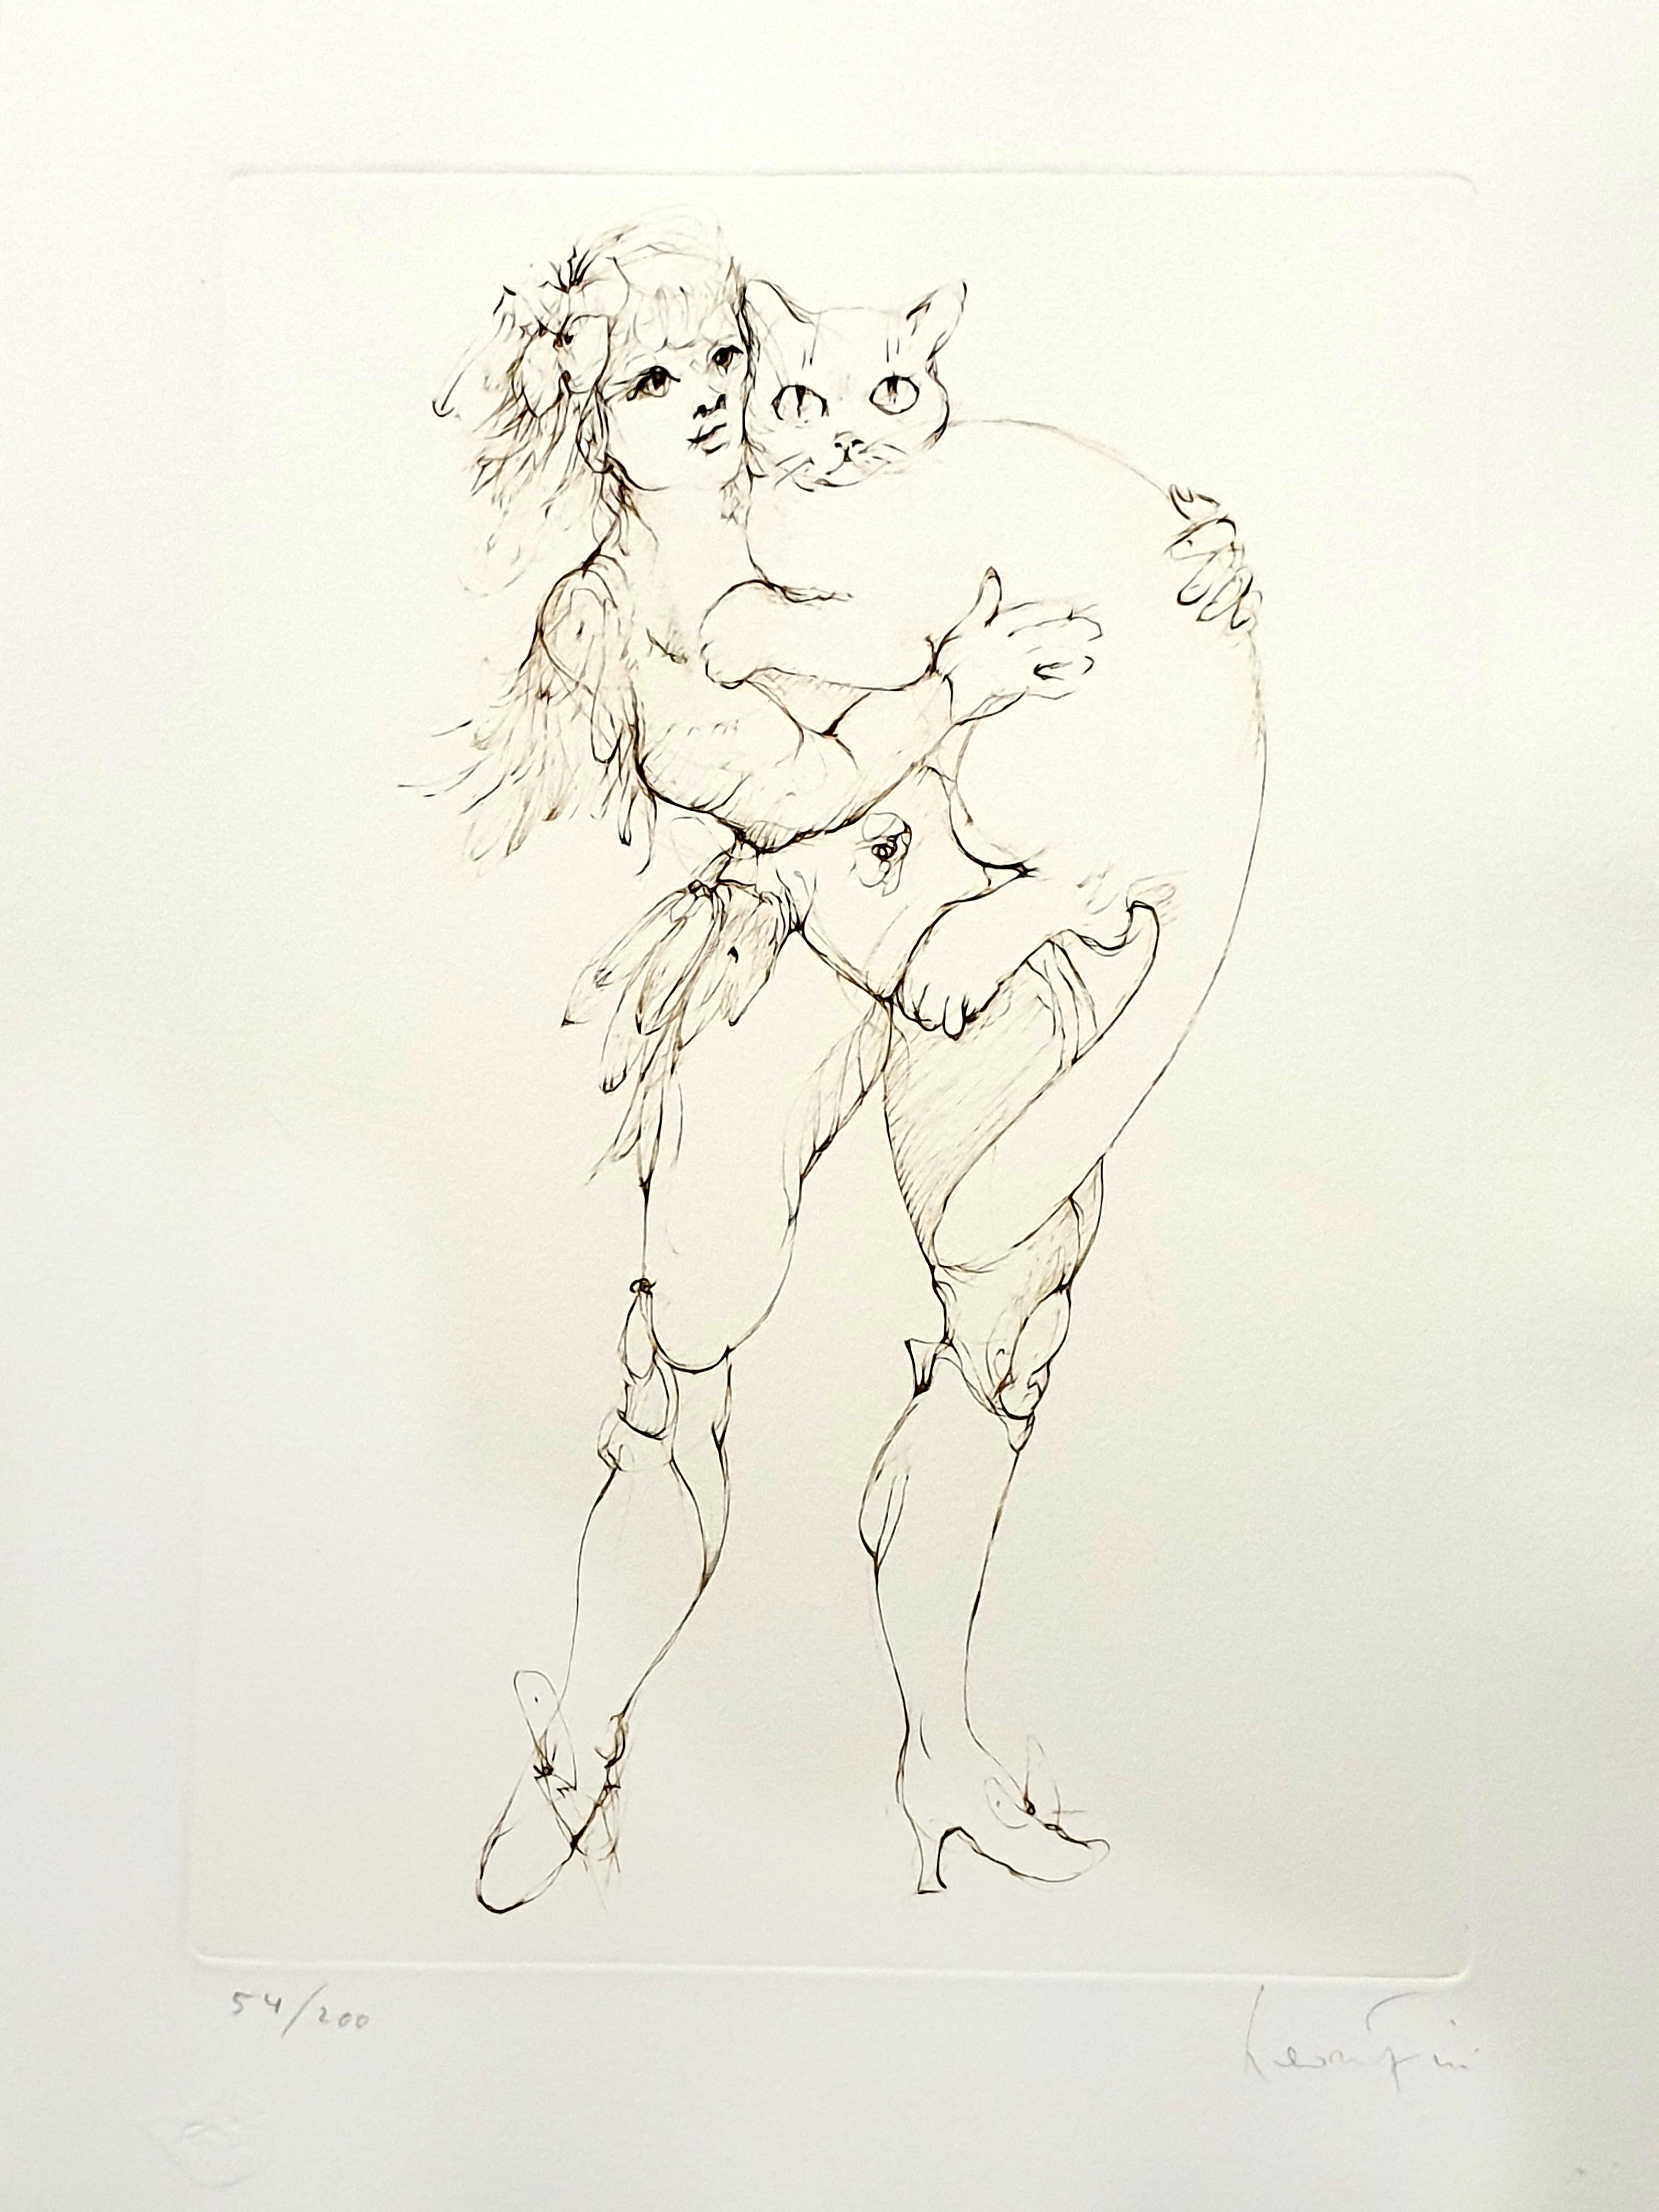 Leonor Fini - The Cat and the Woman - Original Handsigned Lithograph
Les Elus de la Nuit
1986
Conditions: excellent
Handsigned and Numbered
Edition: 230
Dimensions: 38 x 28 cm 
Editions: Trinckvel, Paris